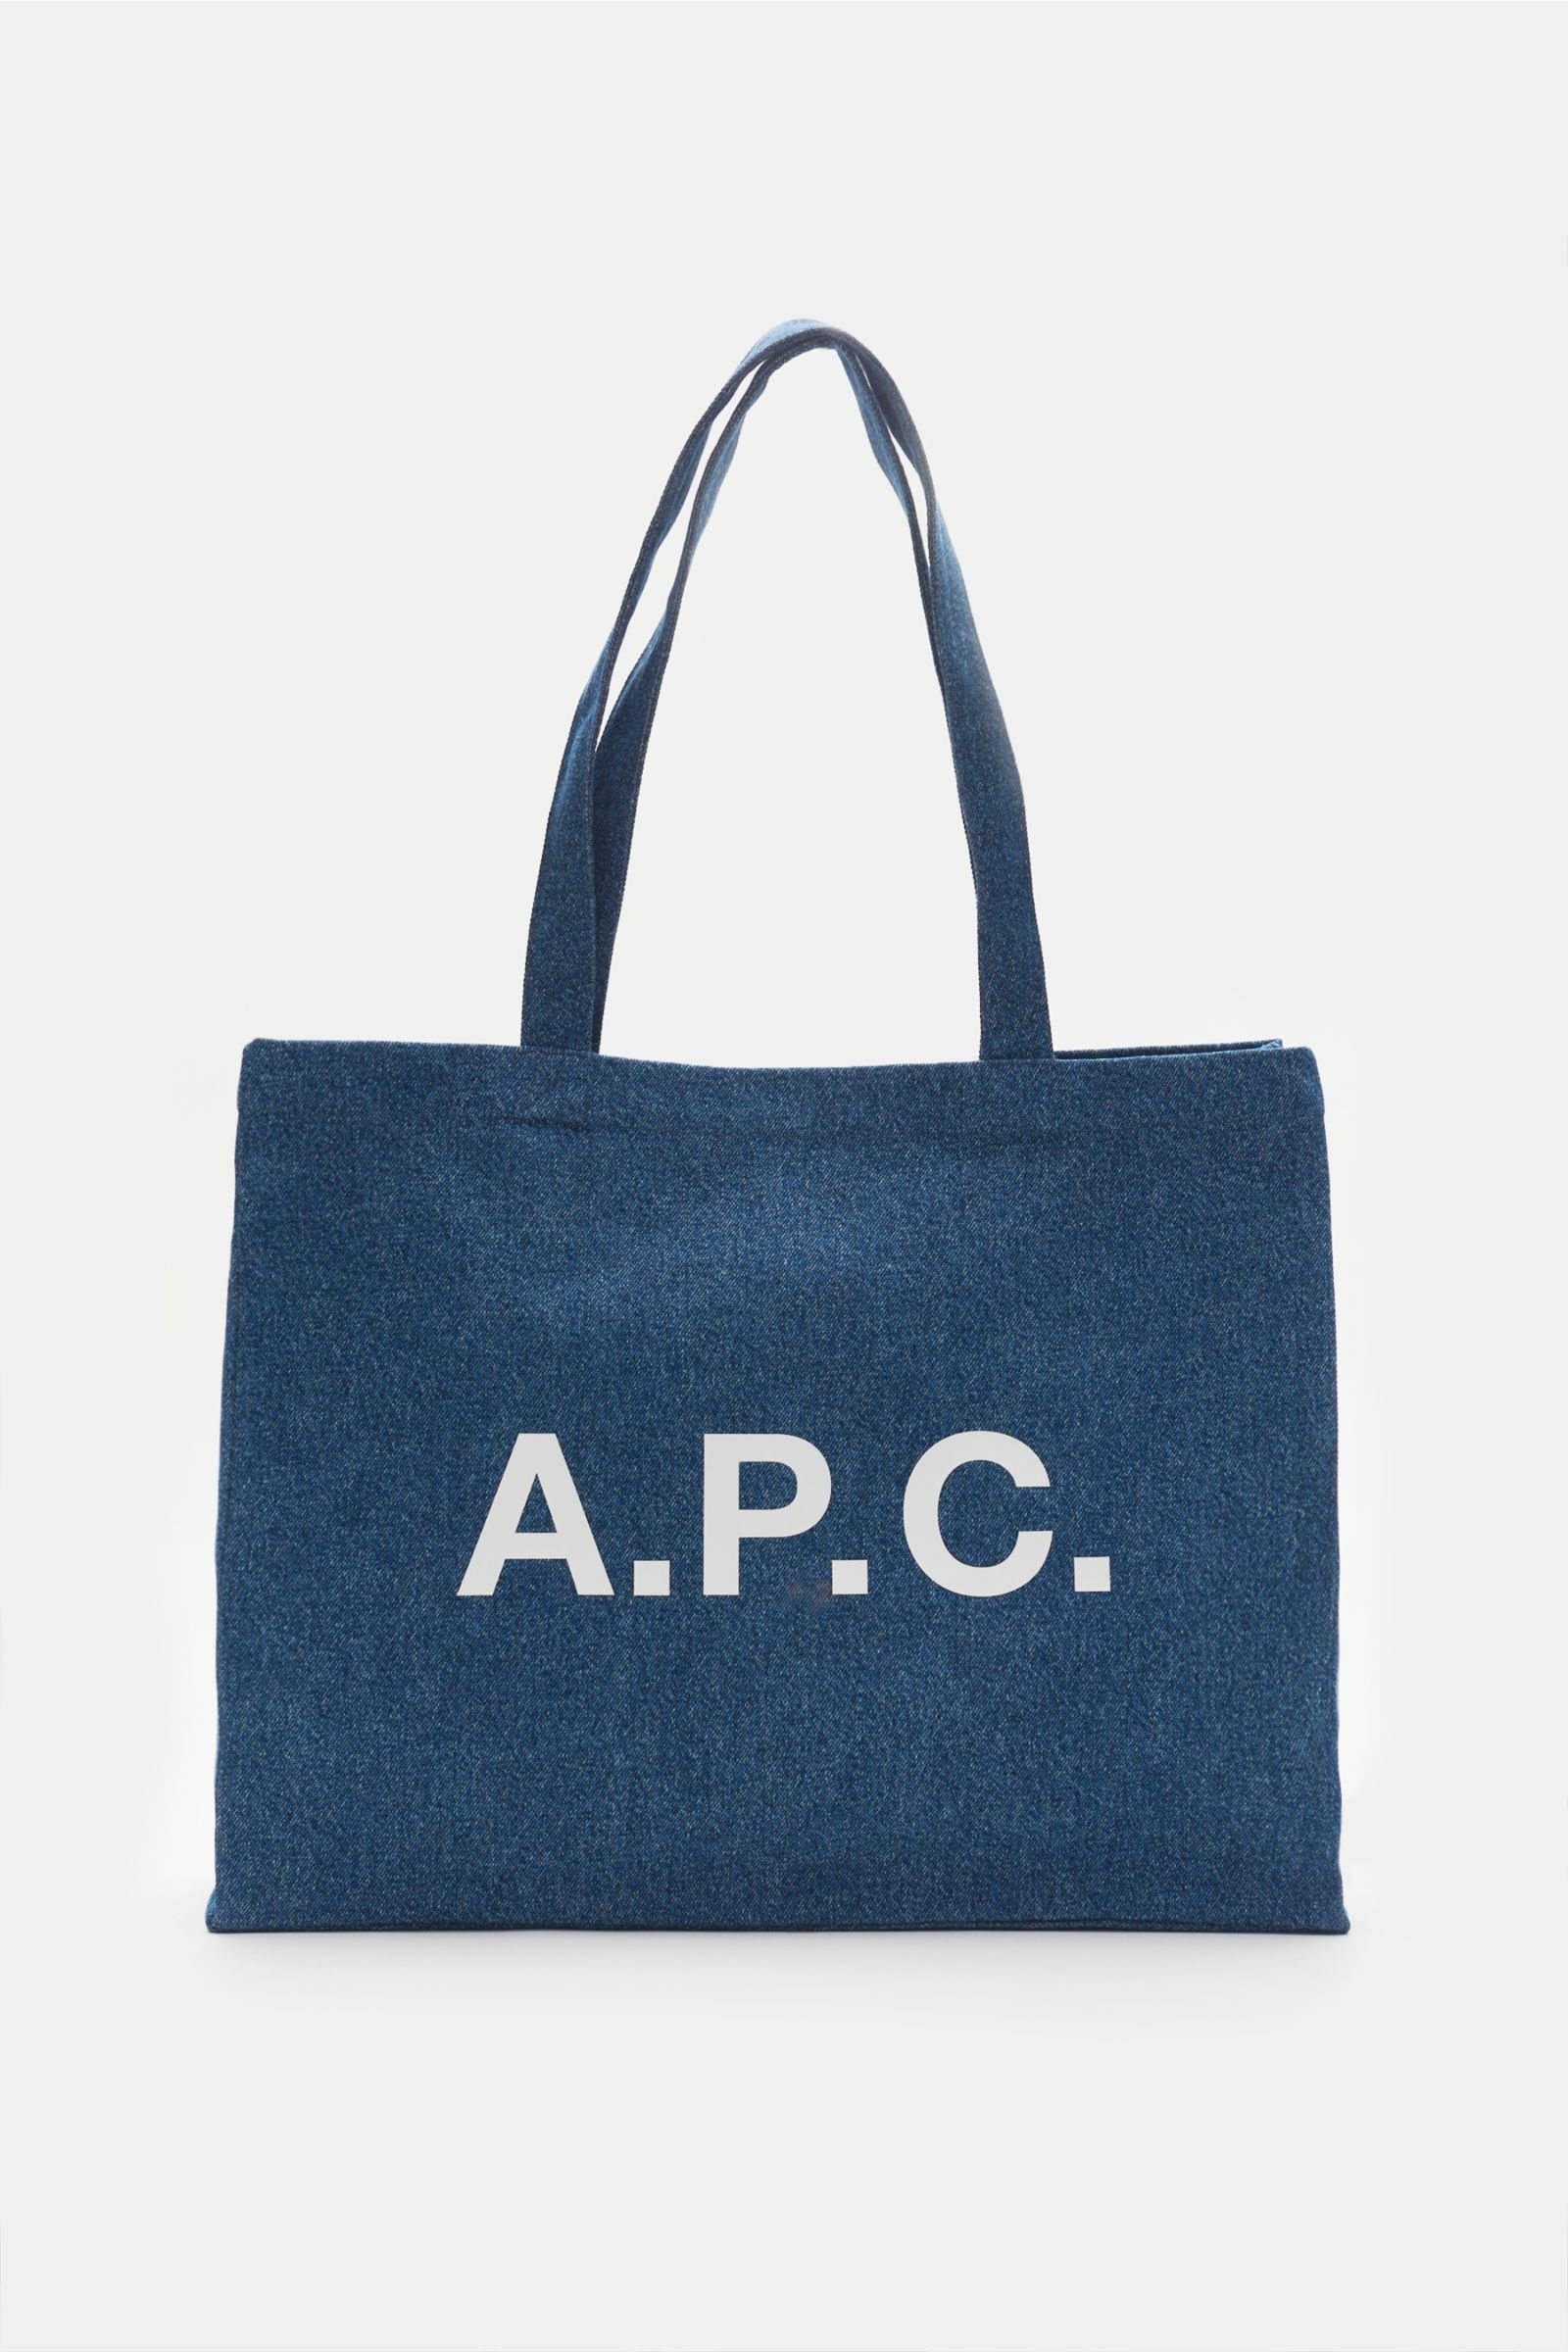 A.P.C. Denim tote bag 'Diane' grey-blue | BRAUN Hamburg